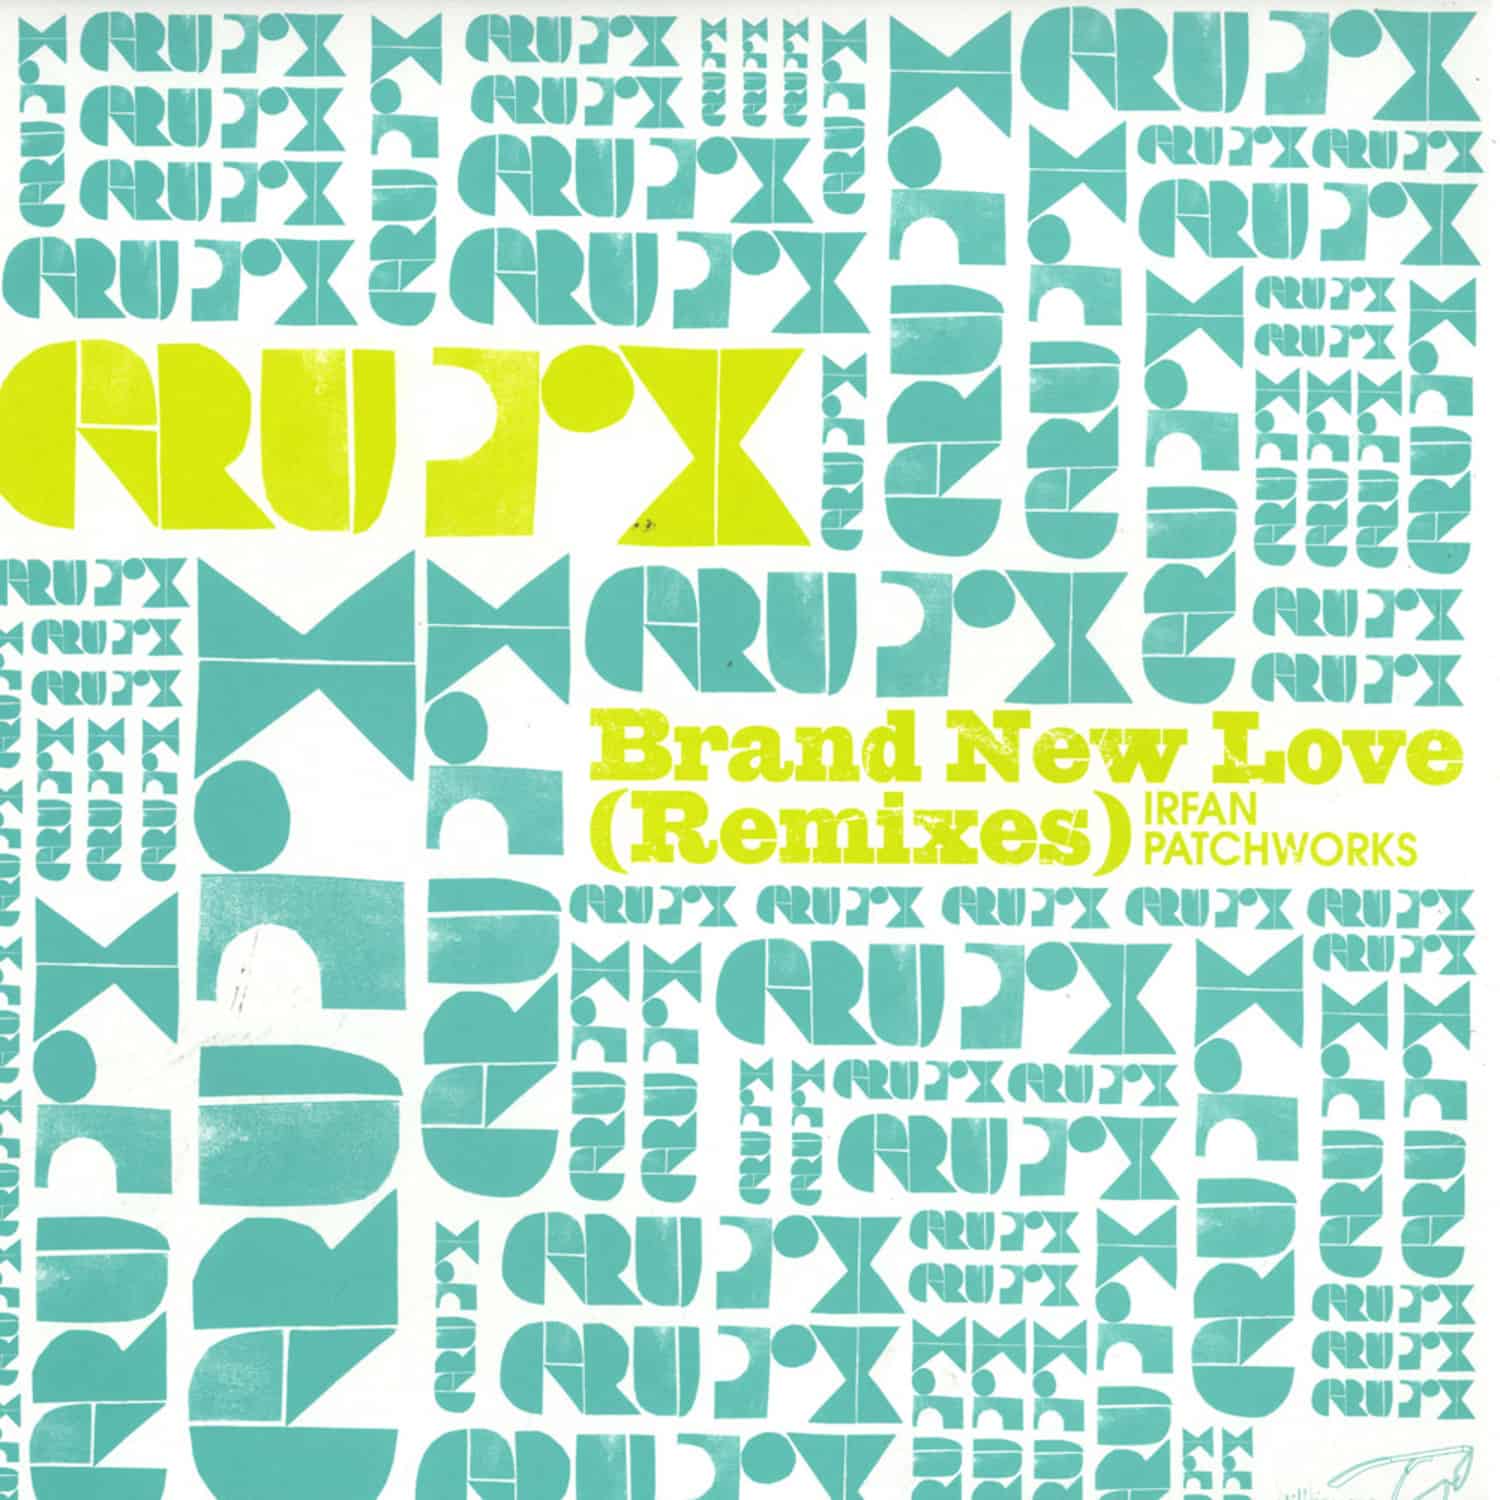 Grupo X - BRAND NEW LOVE